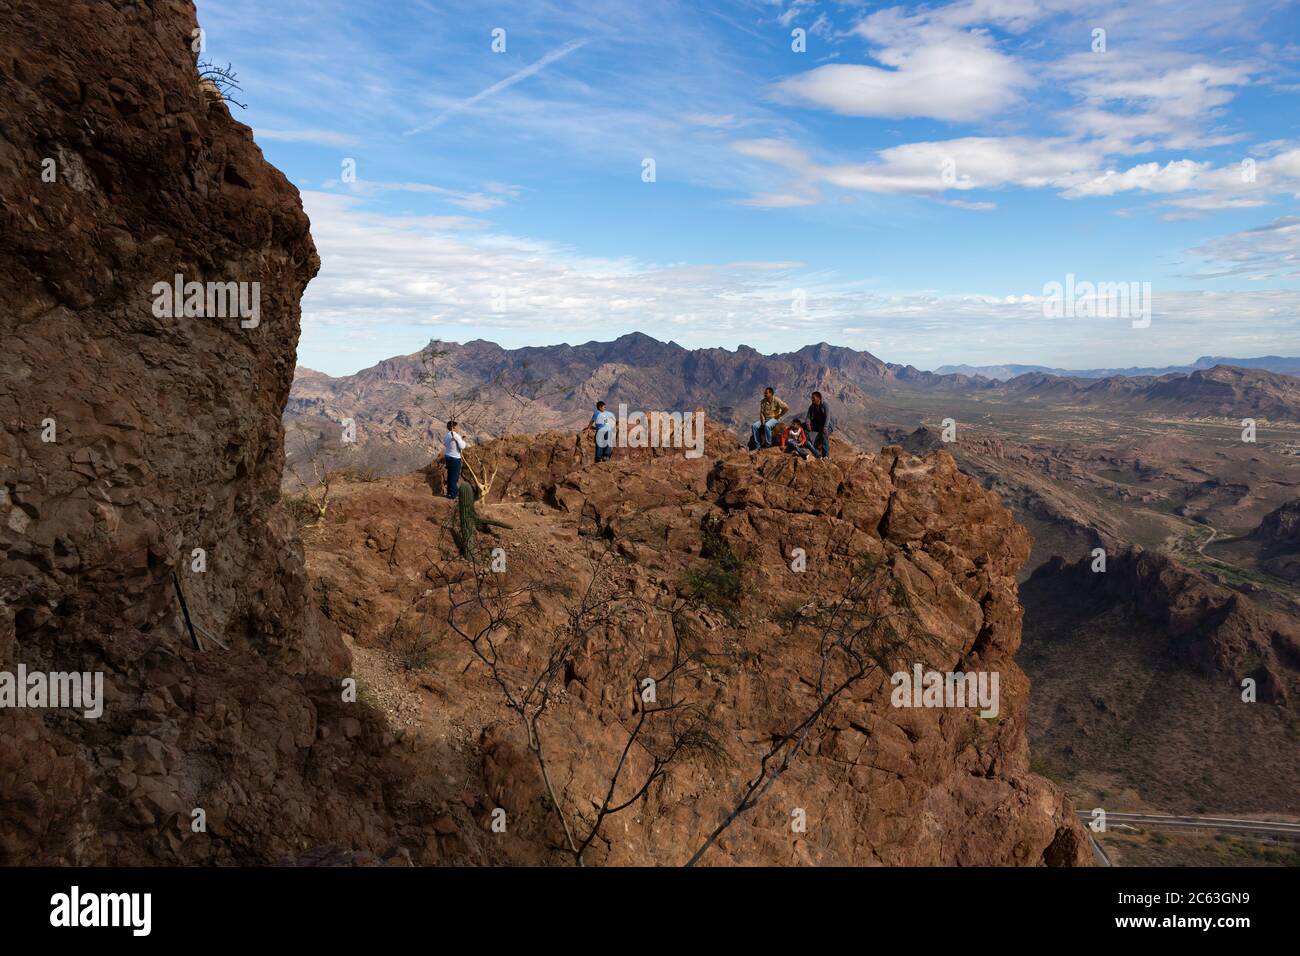 Two men and three boys hike Tetakawi Mountain in San Carlos, Sonora, Mexico. Stock Photo